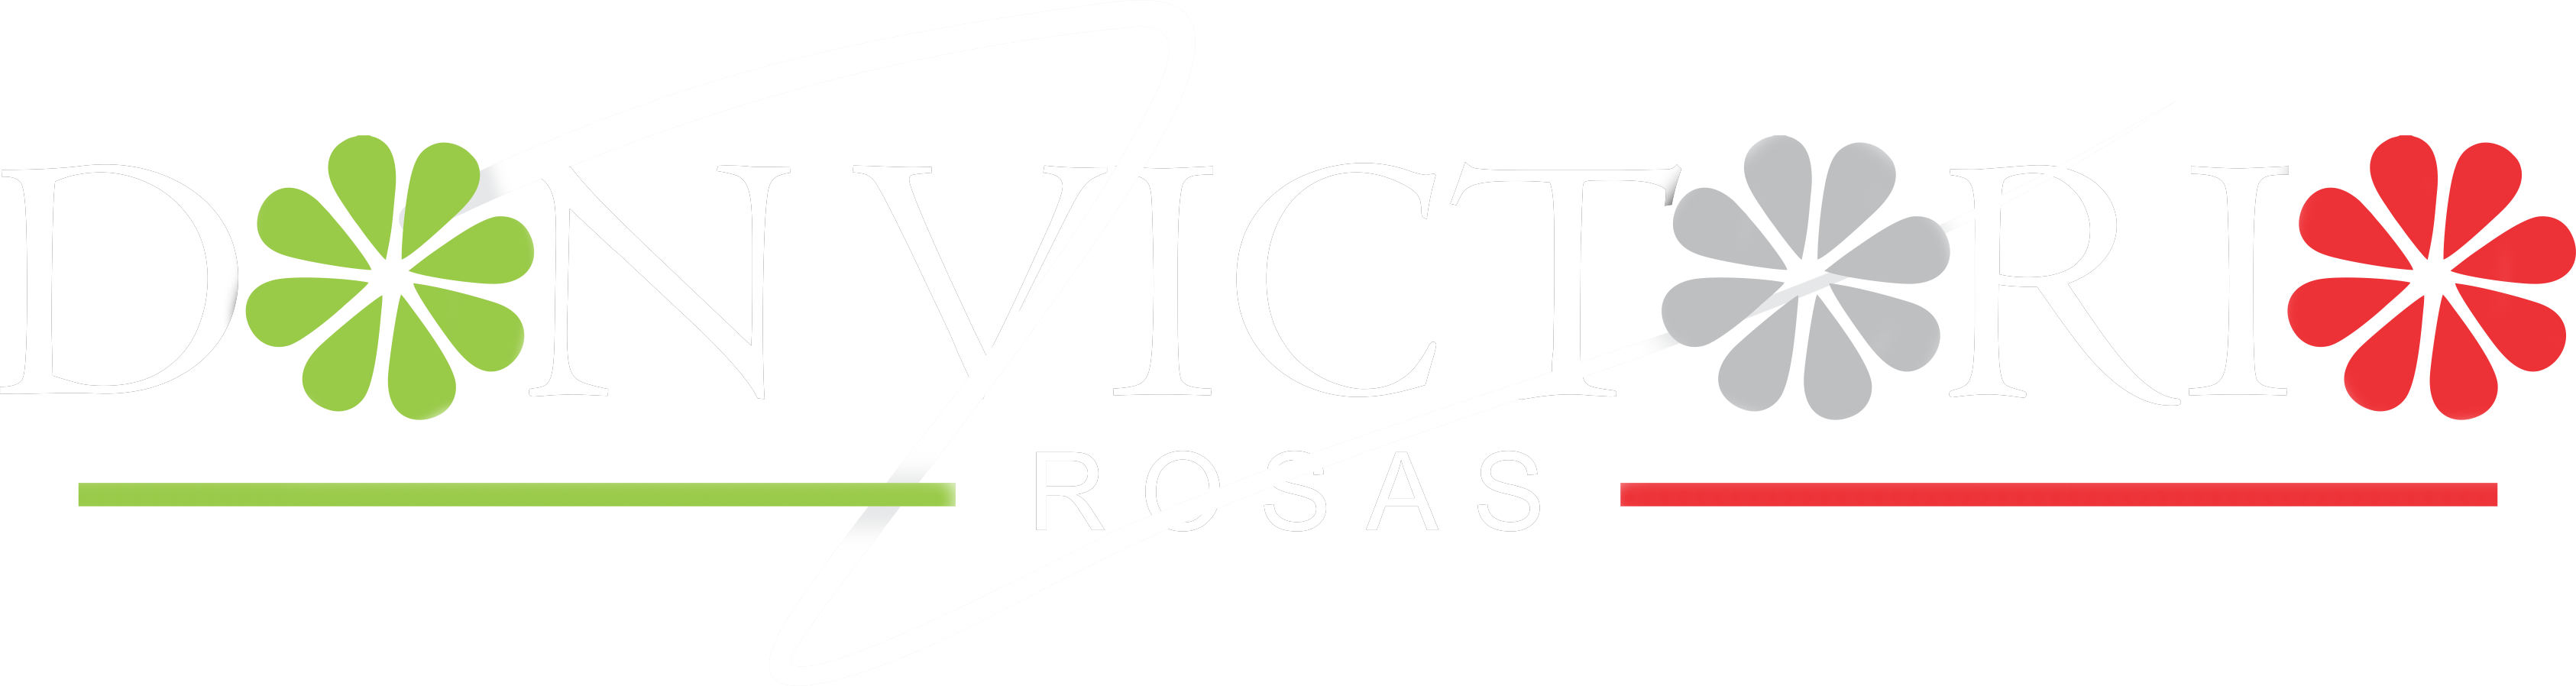 Rosas don Victorio